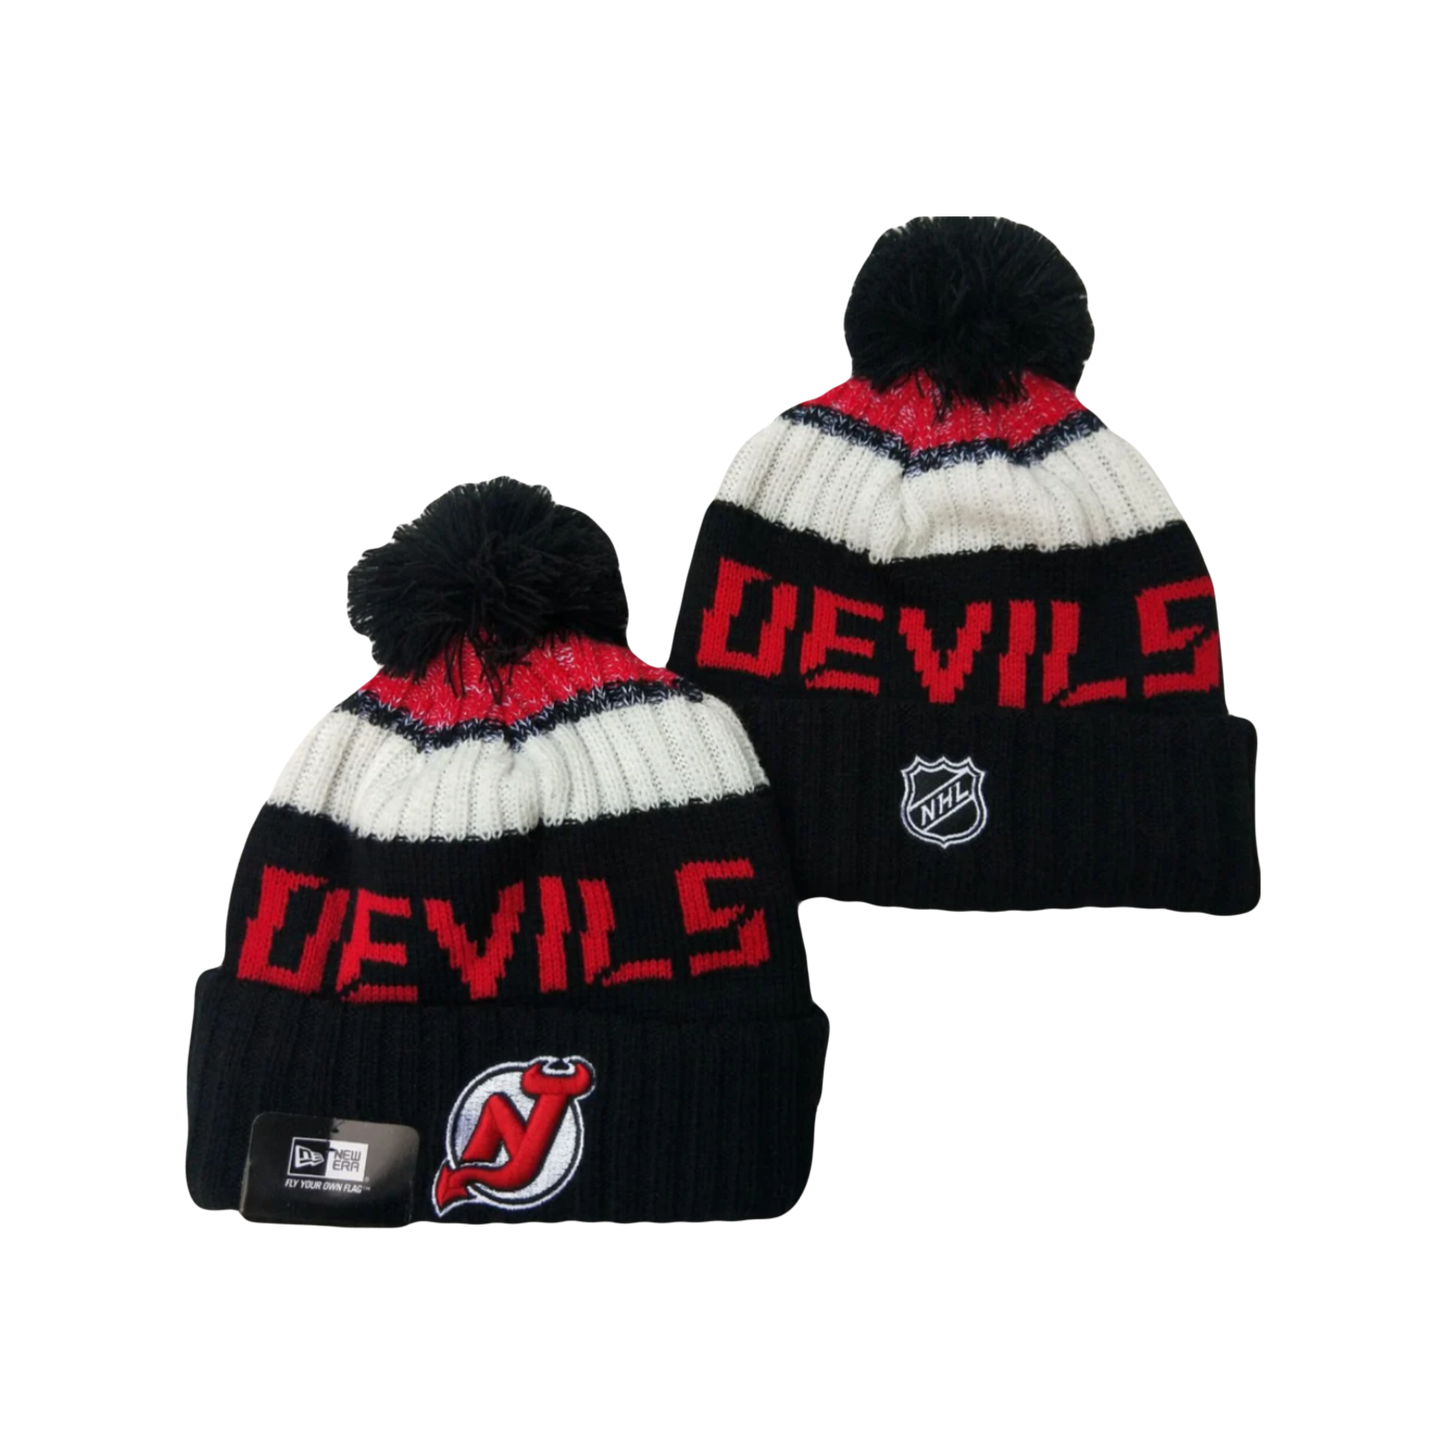 New Jersey Devils ‘Statement’ New Era Knit Beanie - Black